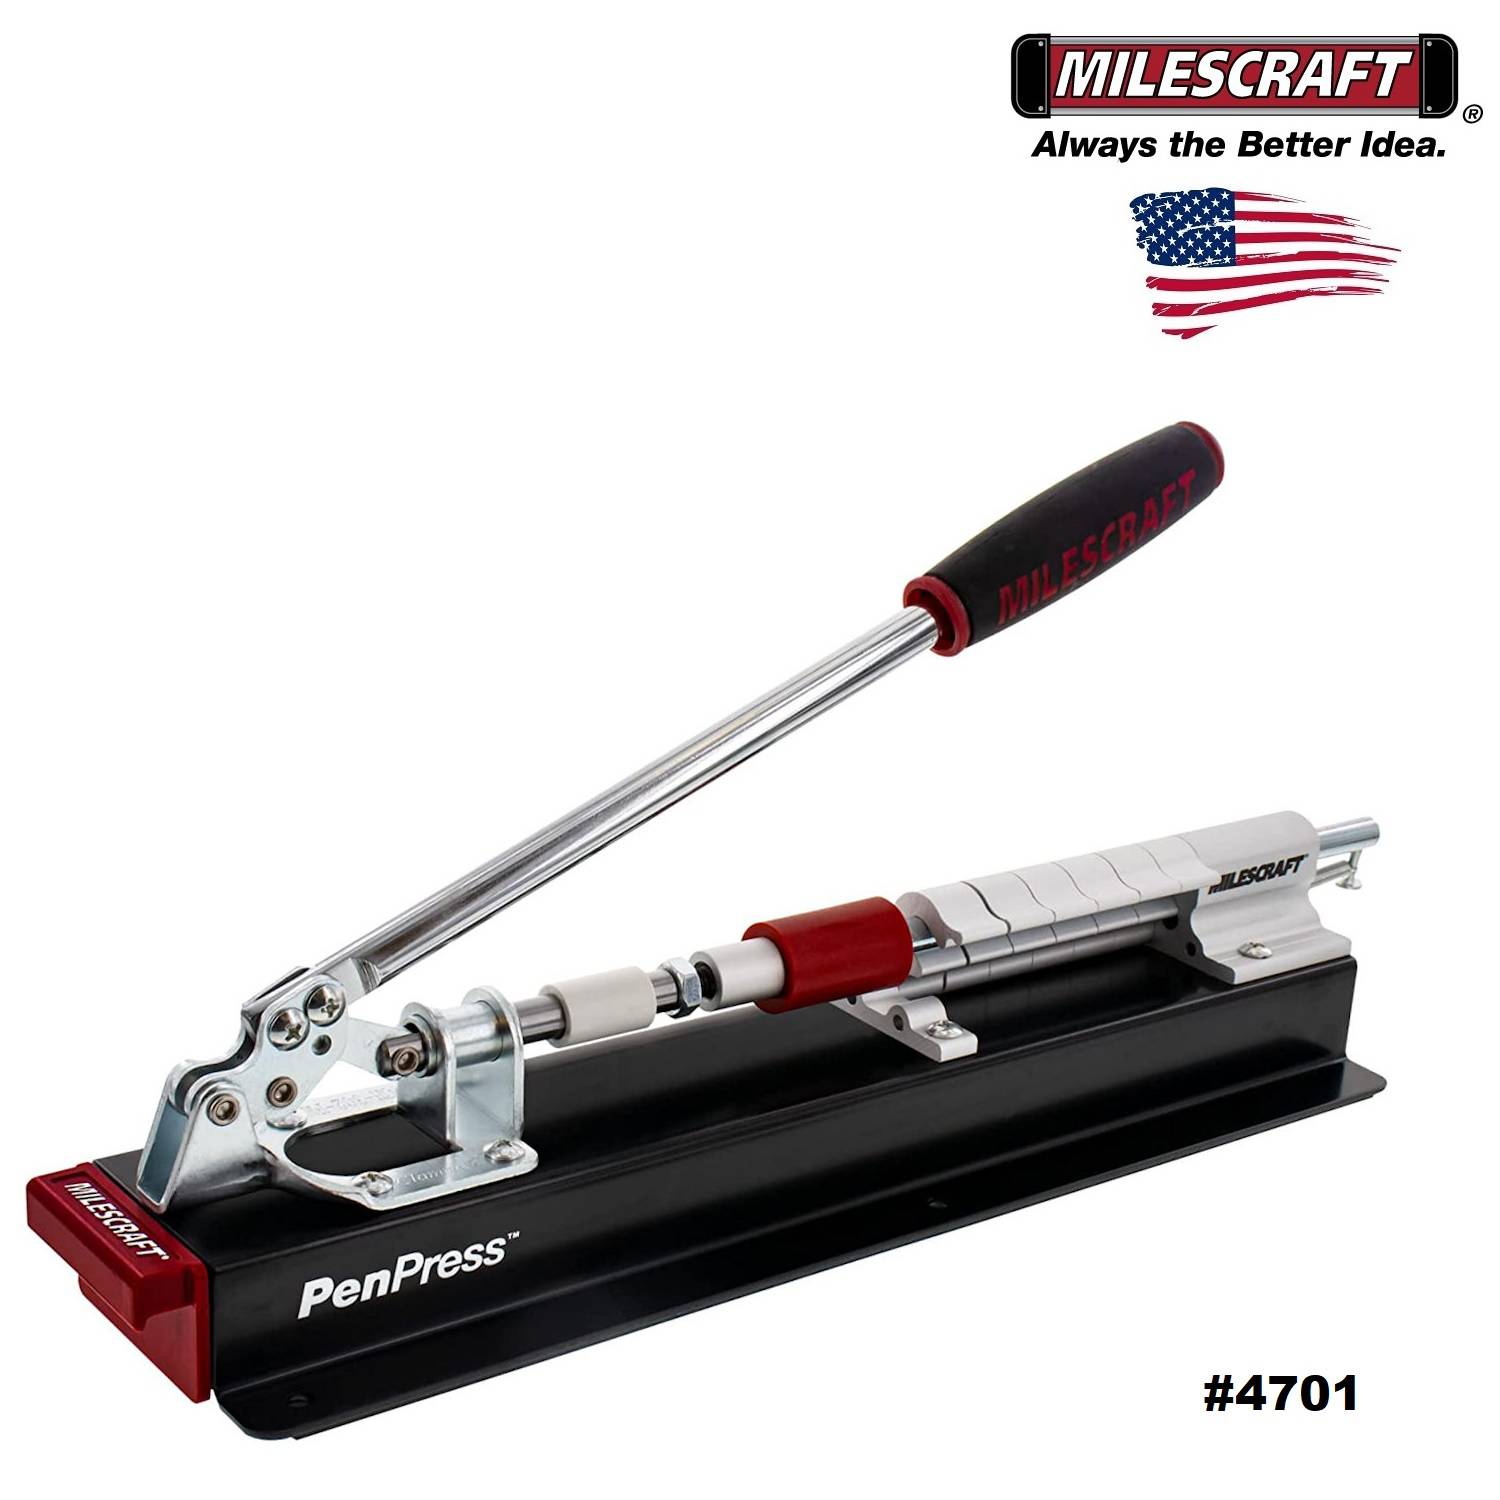 pen-press-milescraft-4701